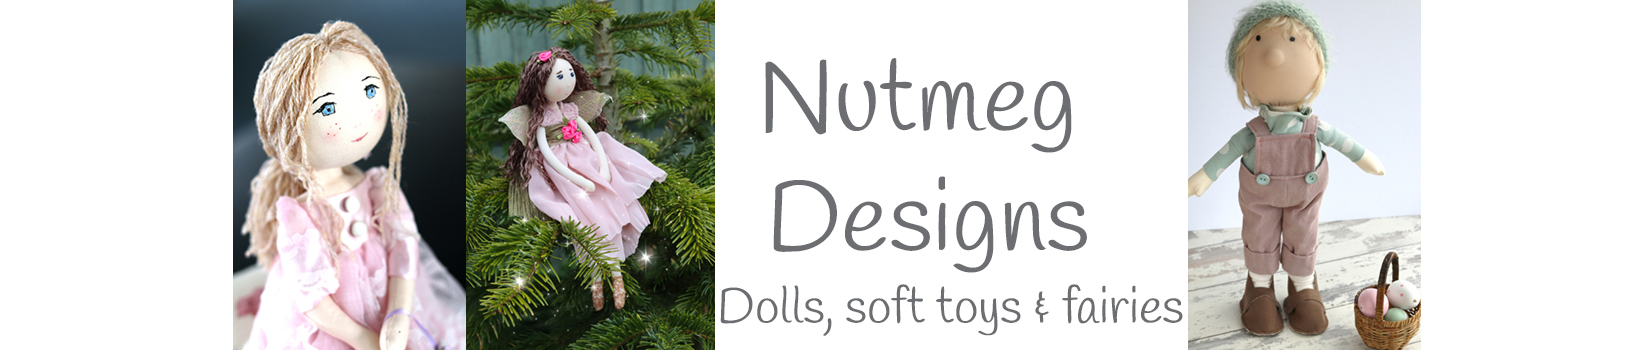 Nutmeg Designs